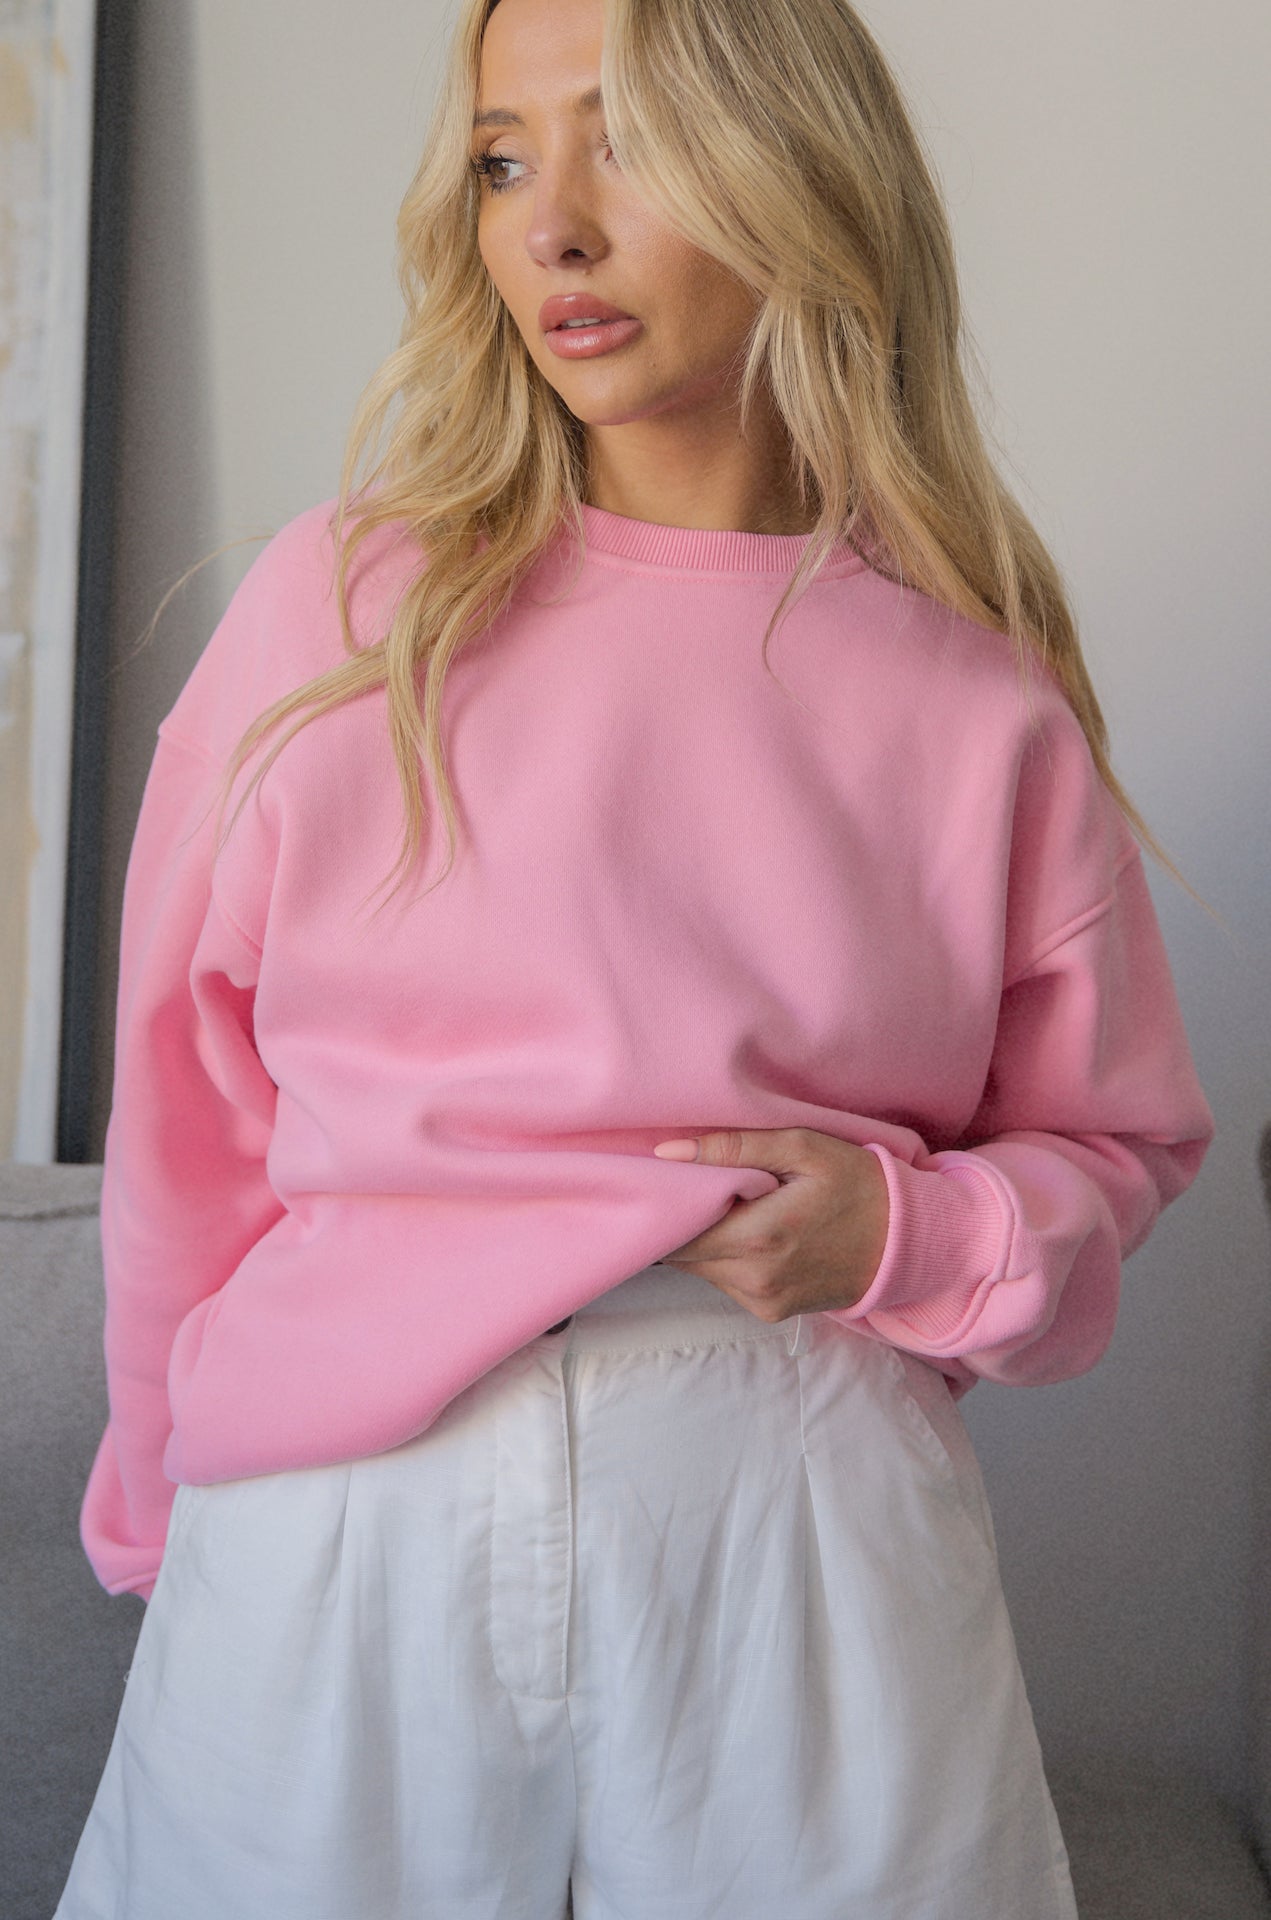 pink be kind sweatshirt